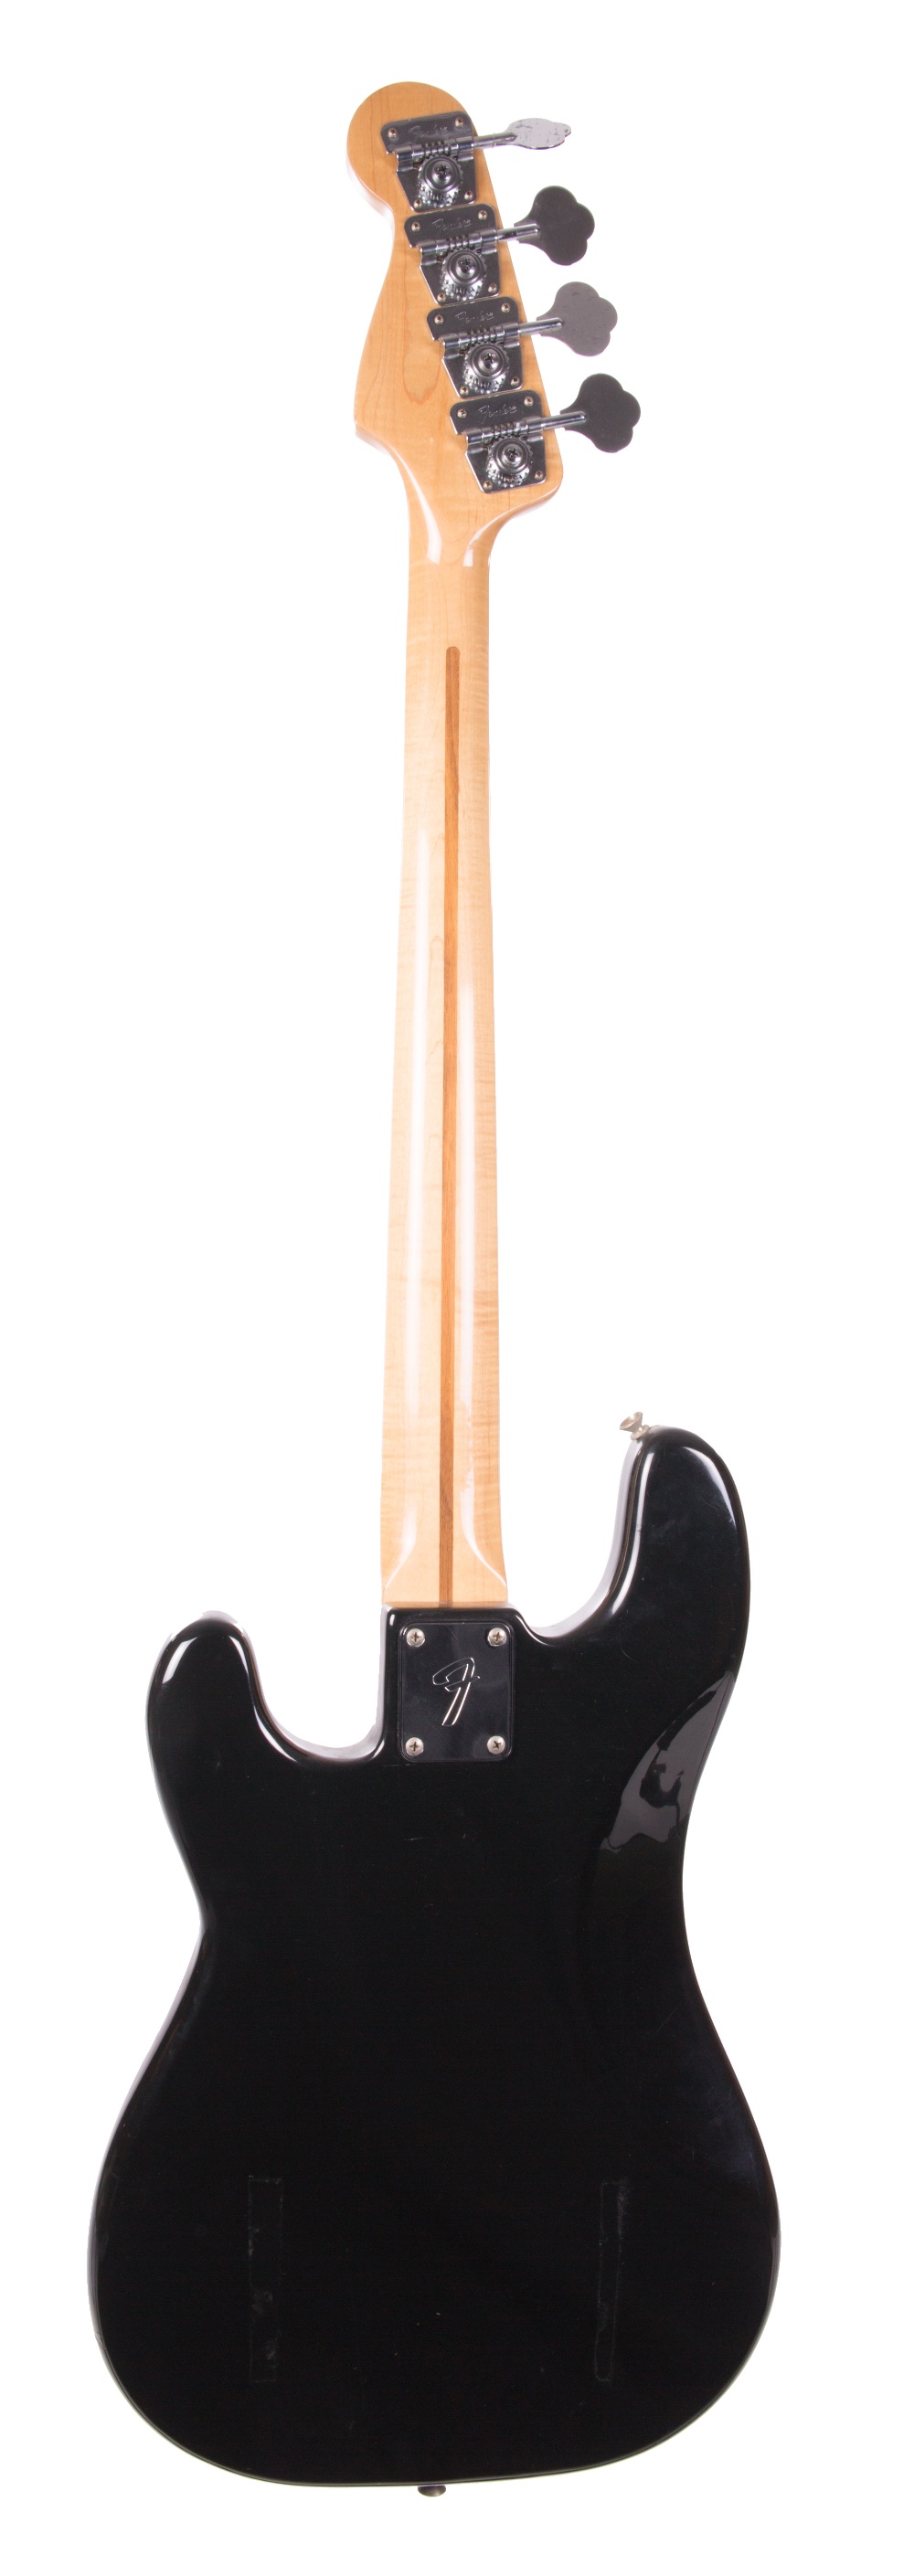 1978 Fender Precision Bass guitar, made in USA, ser. no. S8xxxx6; Finish: black, some minor - Image 2 of 2